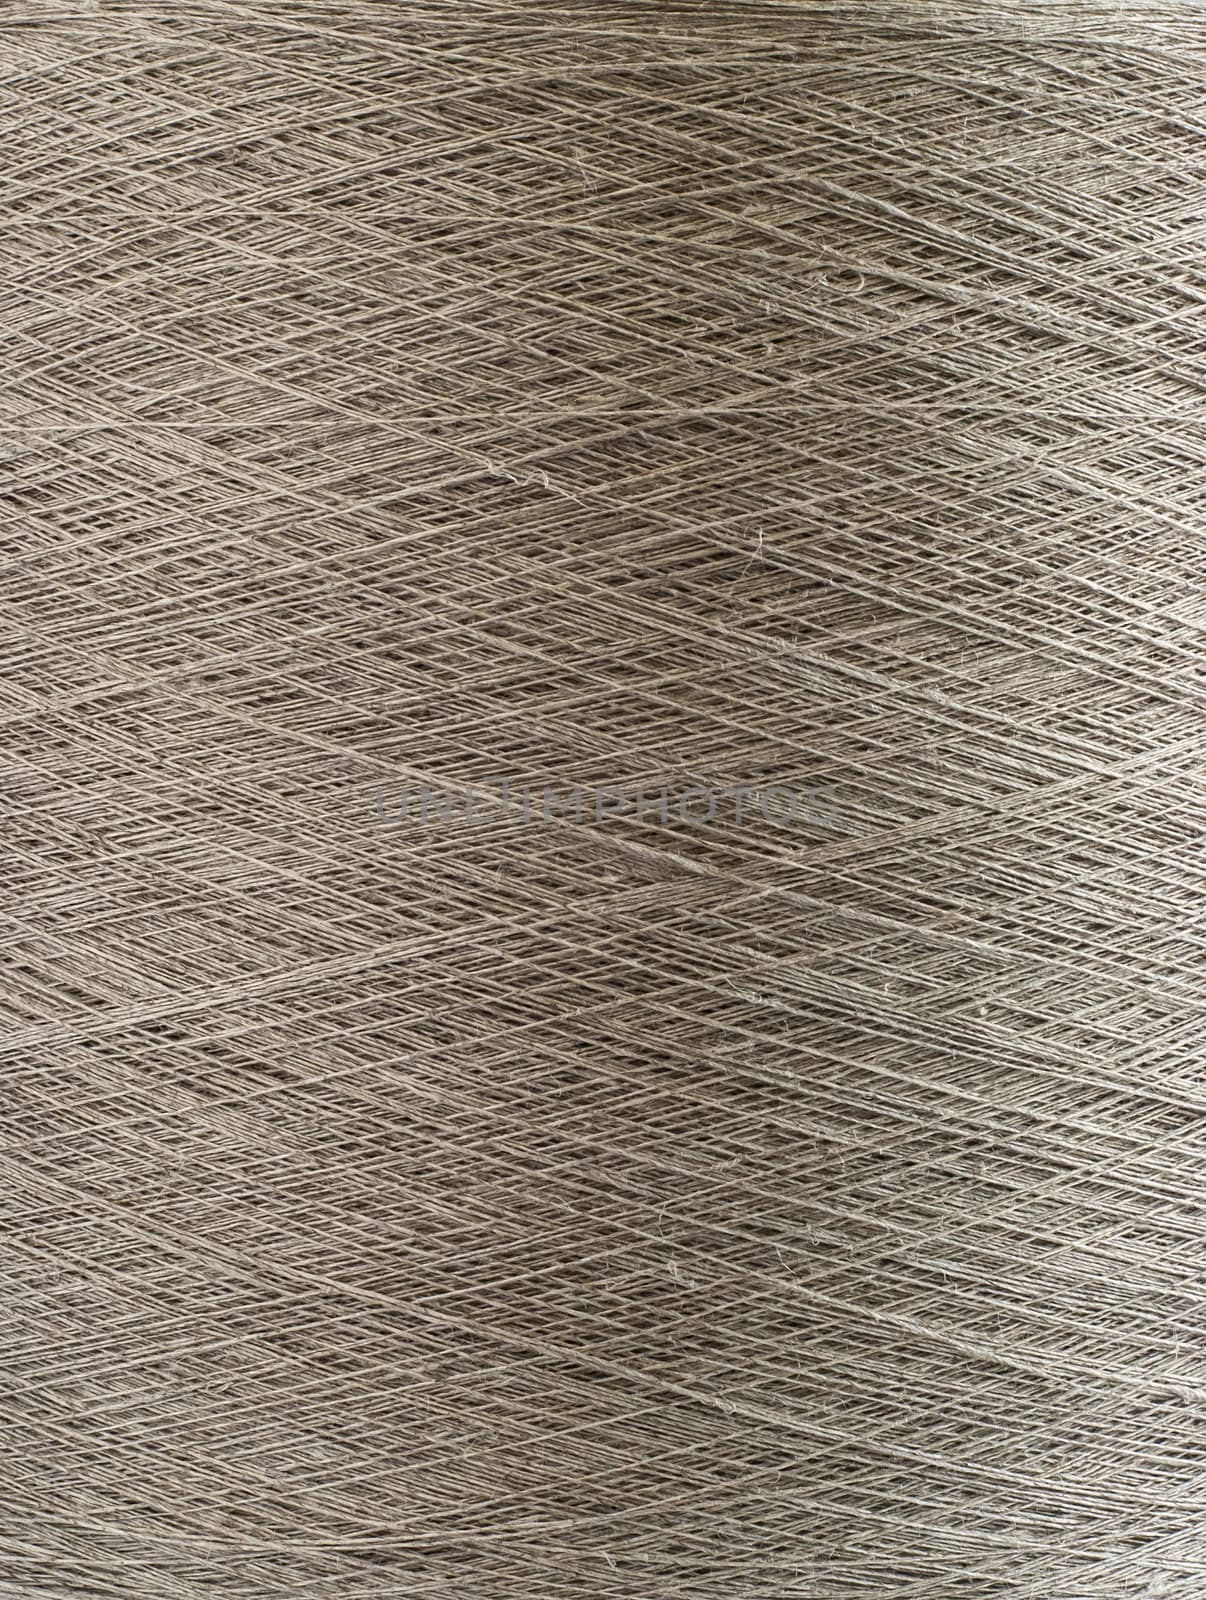 Natural linen yarn bobbin closeup detail as background